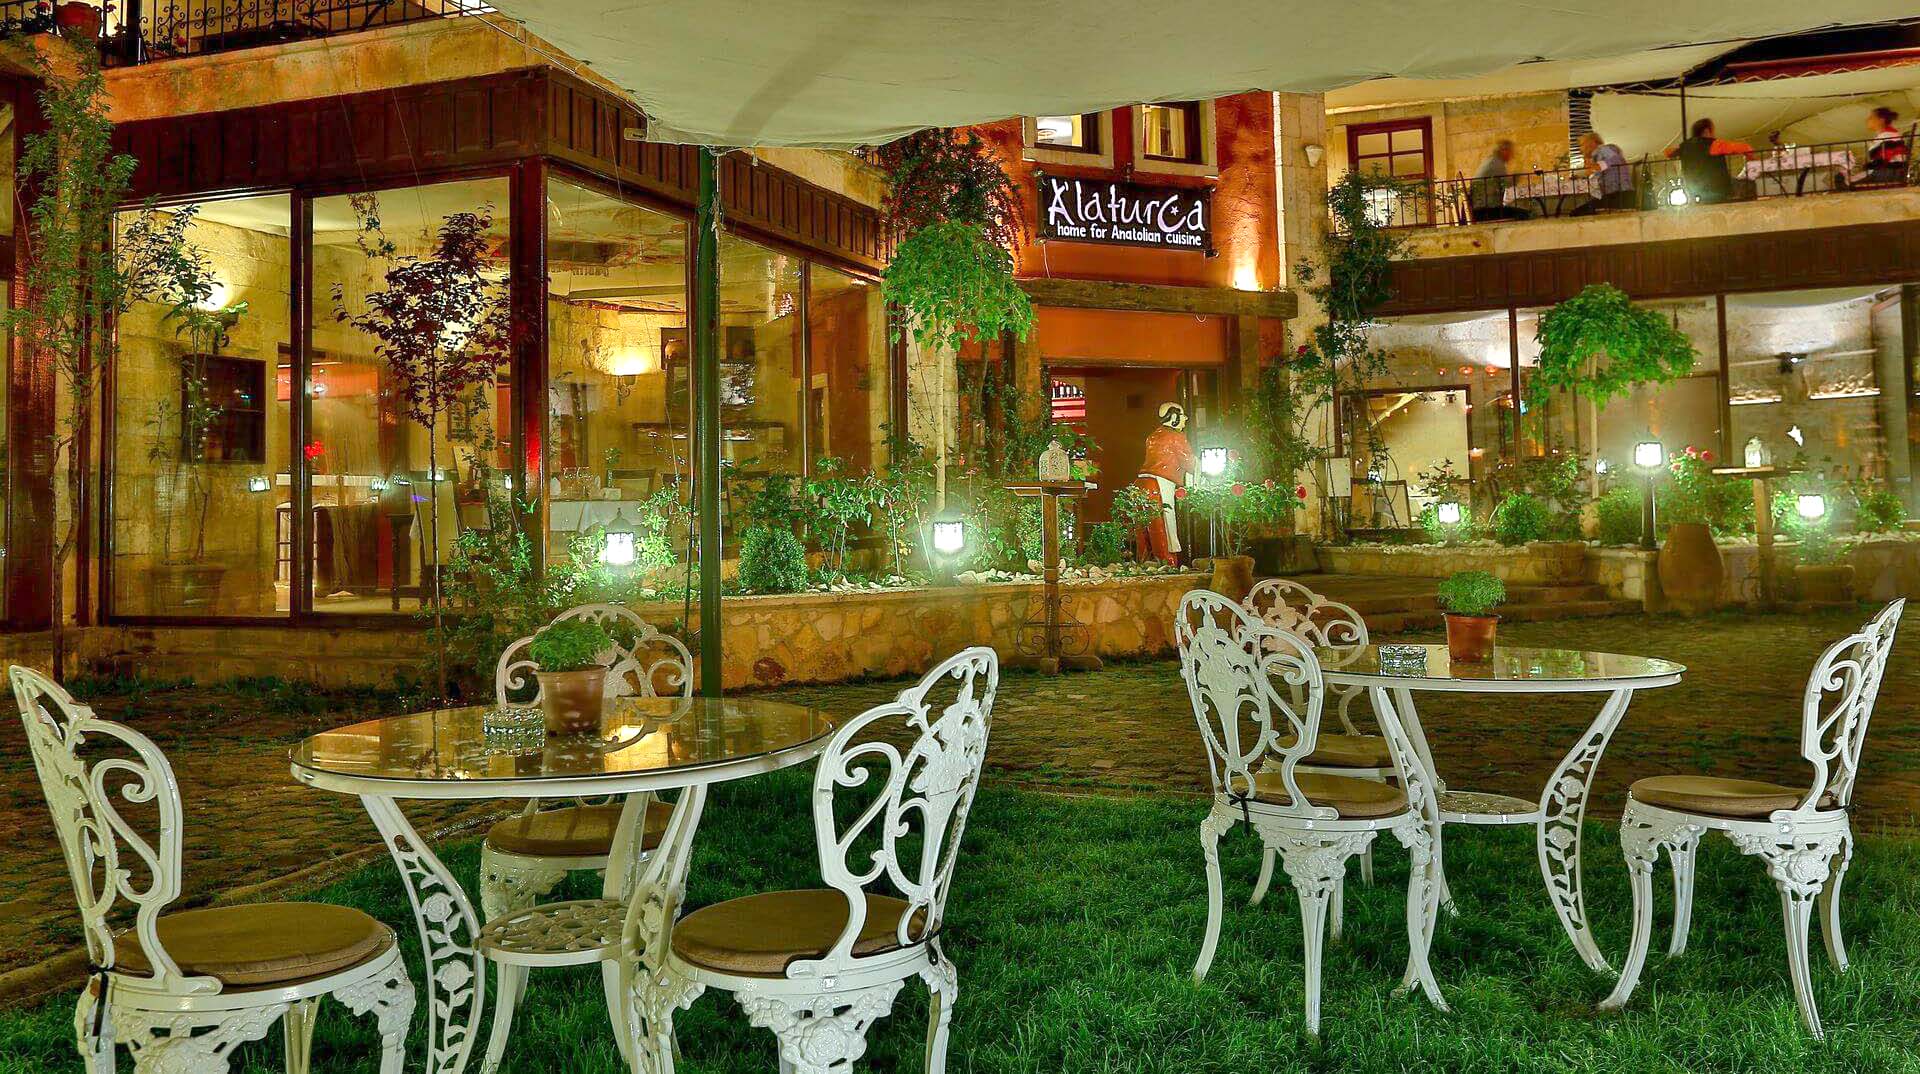 Ala Turka Restaurant